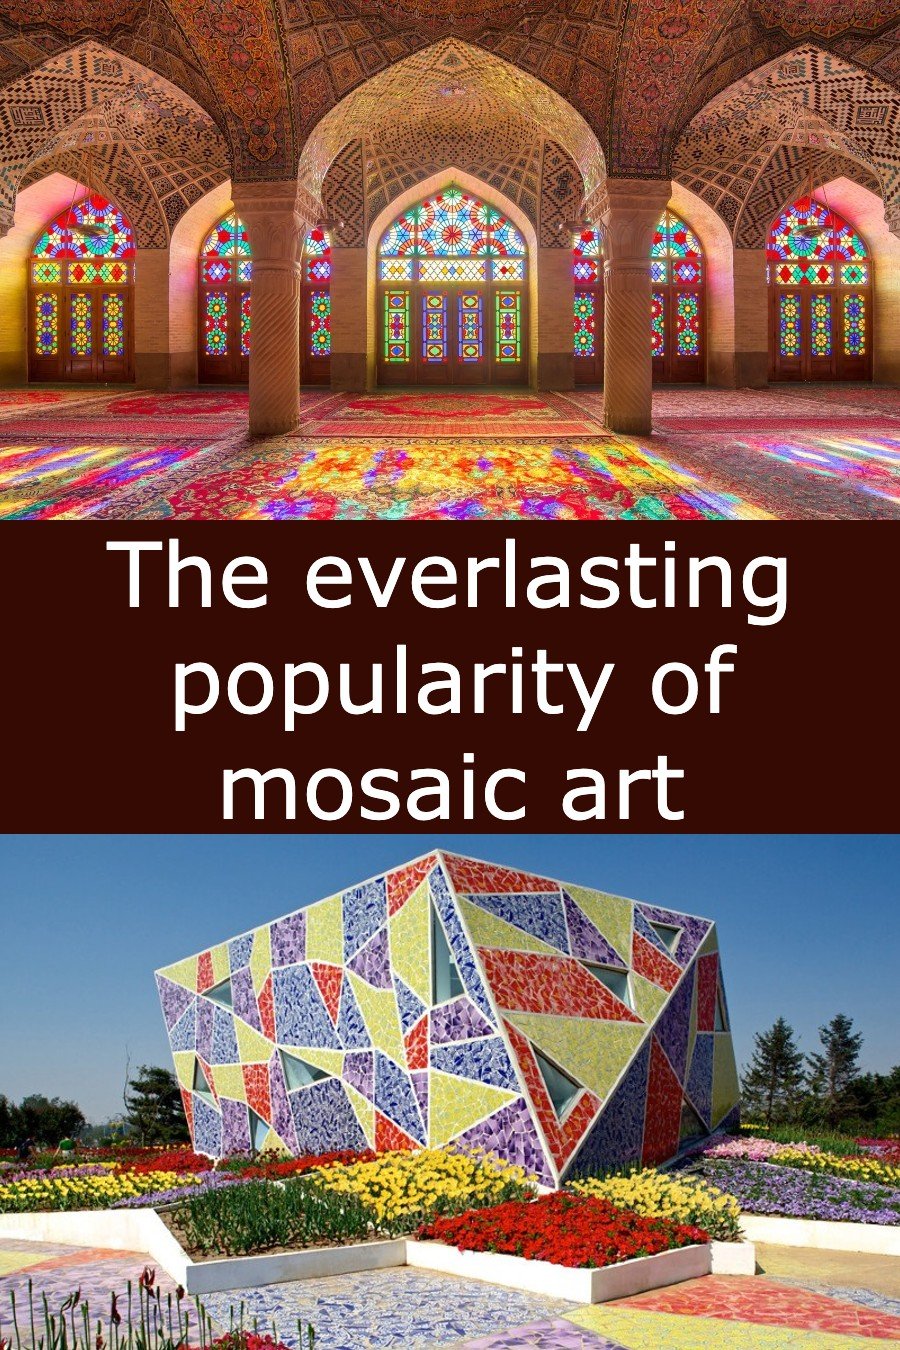 contemporary_mosaic_art_masterpiece - Mosaic_Artwork - Contemporary_Mosaic_Design